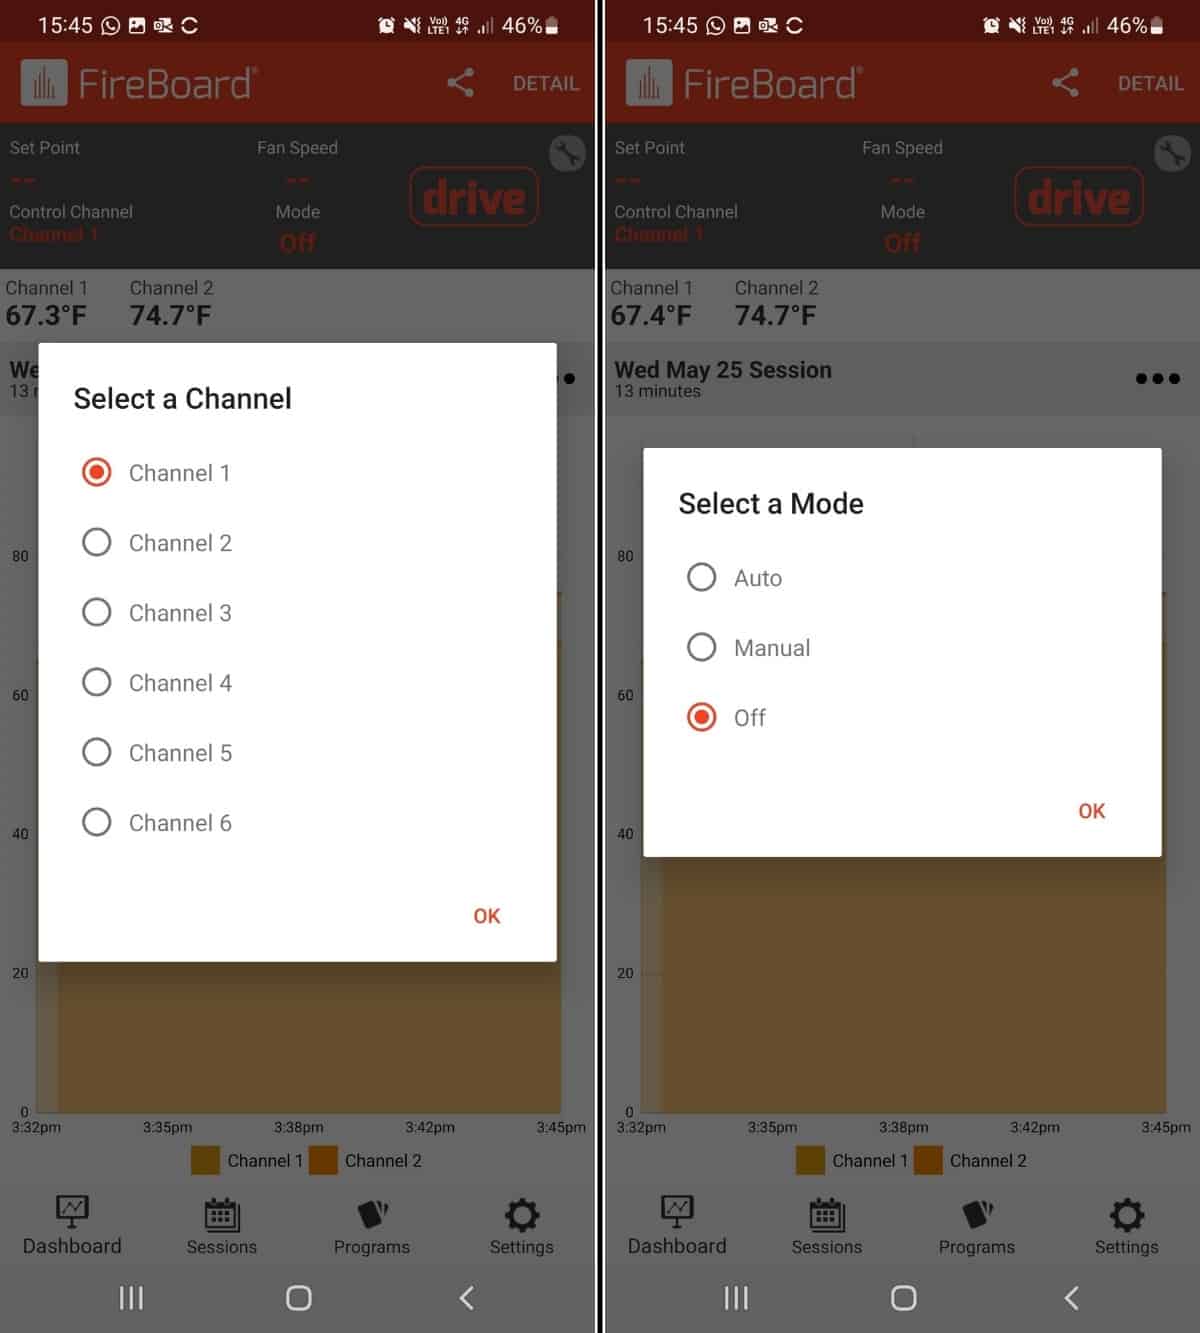 FireBoard app screenshots showing how to set up a target temperature